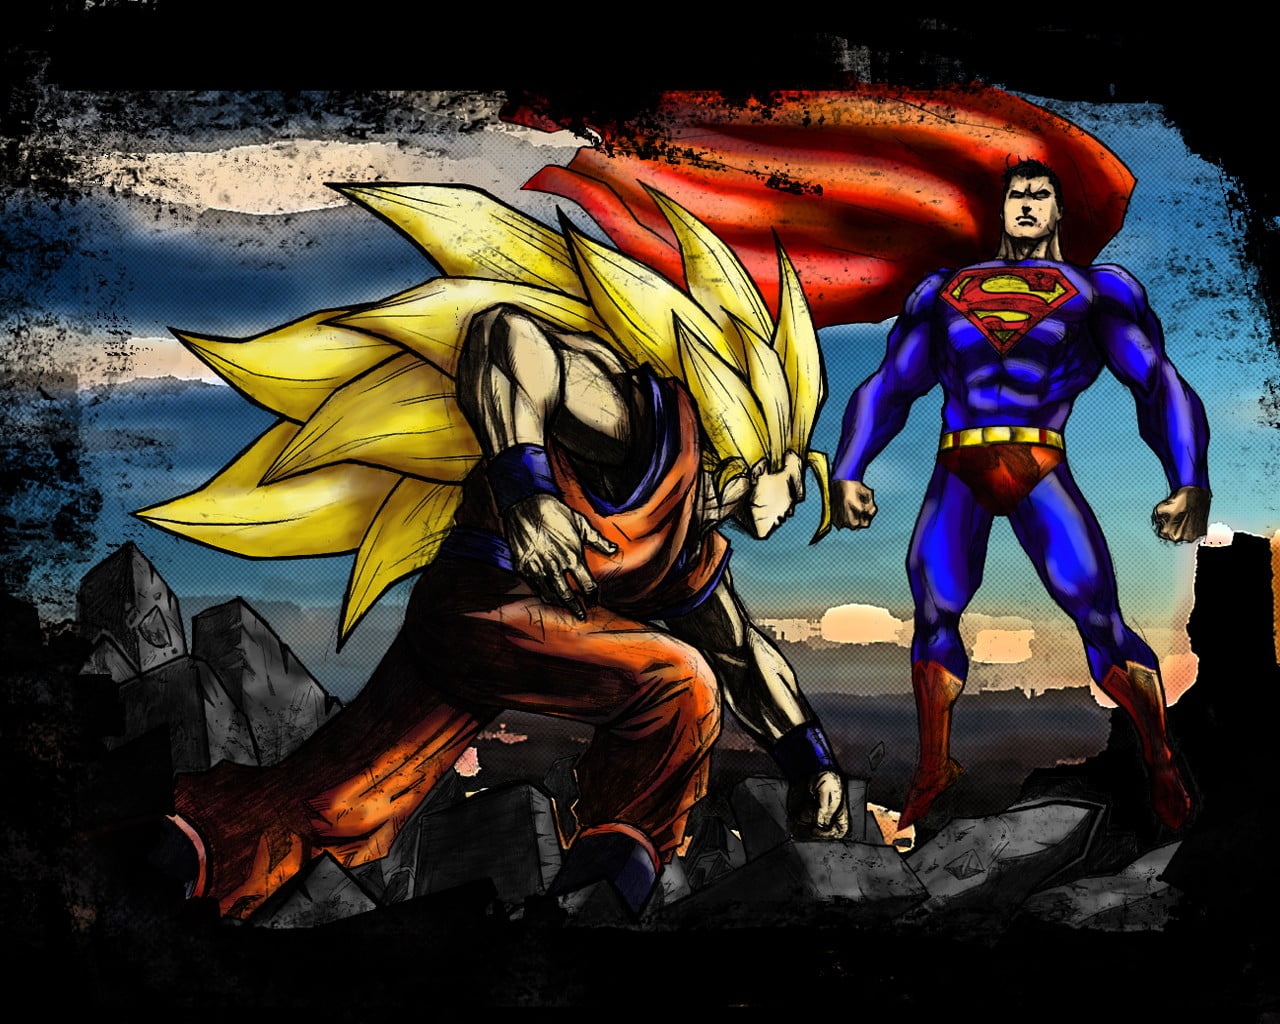 San Goku and Superman wallpaper, Son Goku, fighting, representation